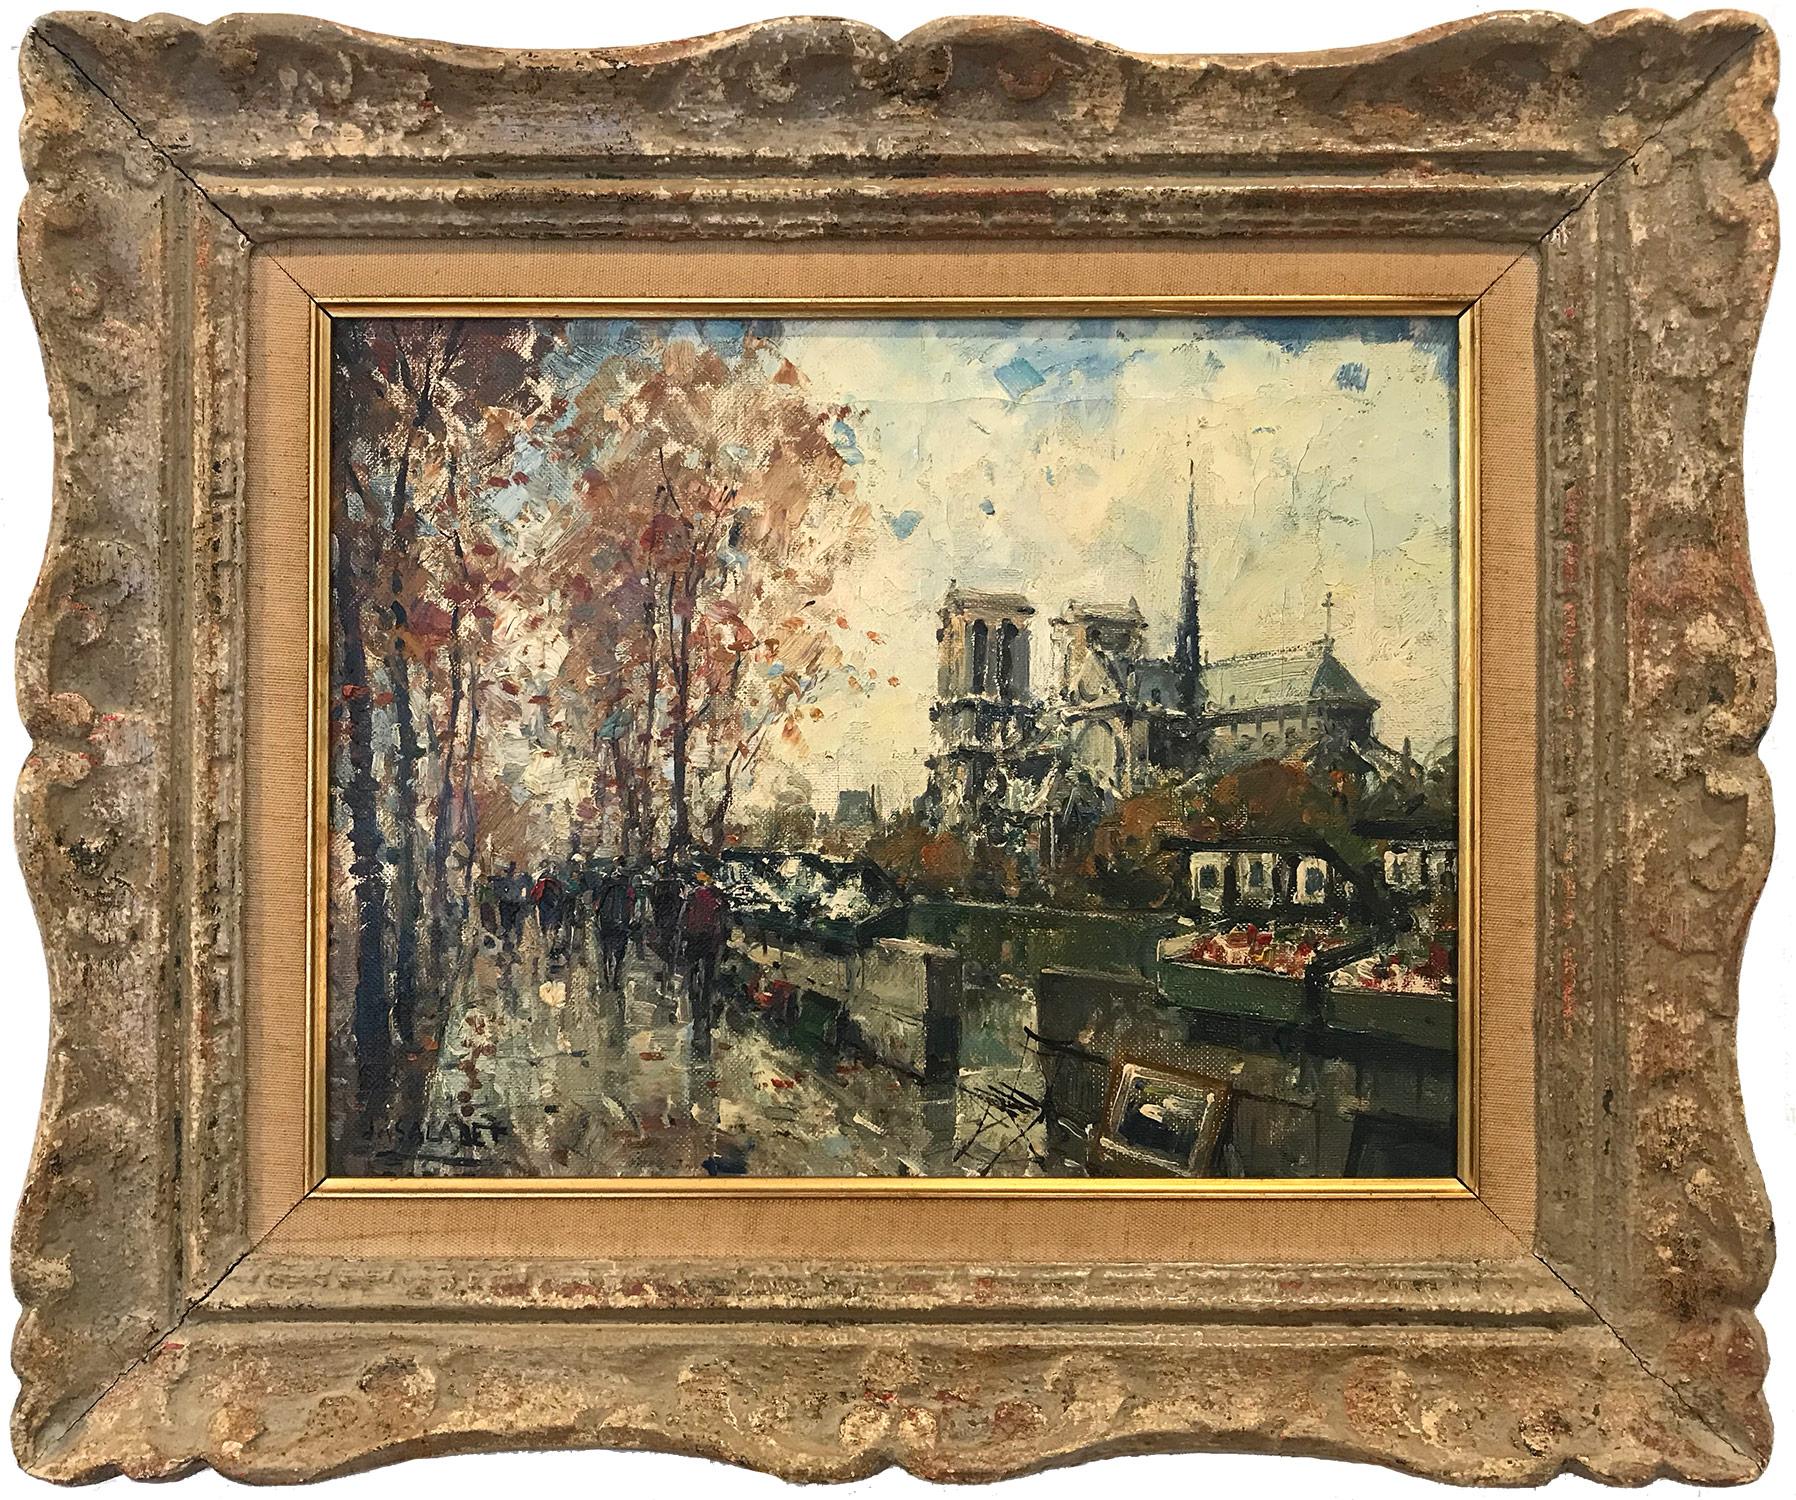 Jean Salabet Landscape Painting - "Notre Dame" Post-Impressionist Parisian Street Scene Oil Painting on Canvas